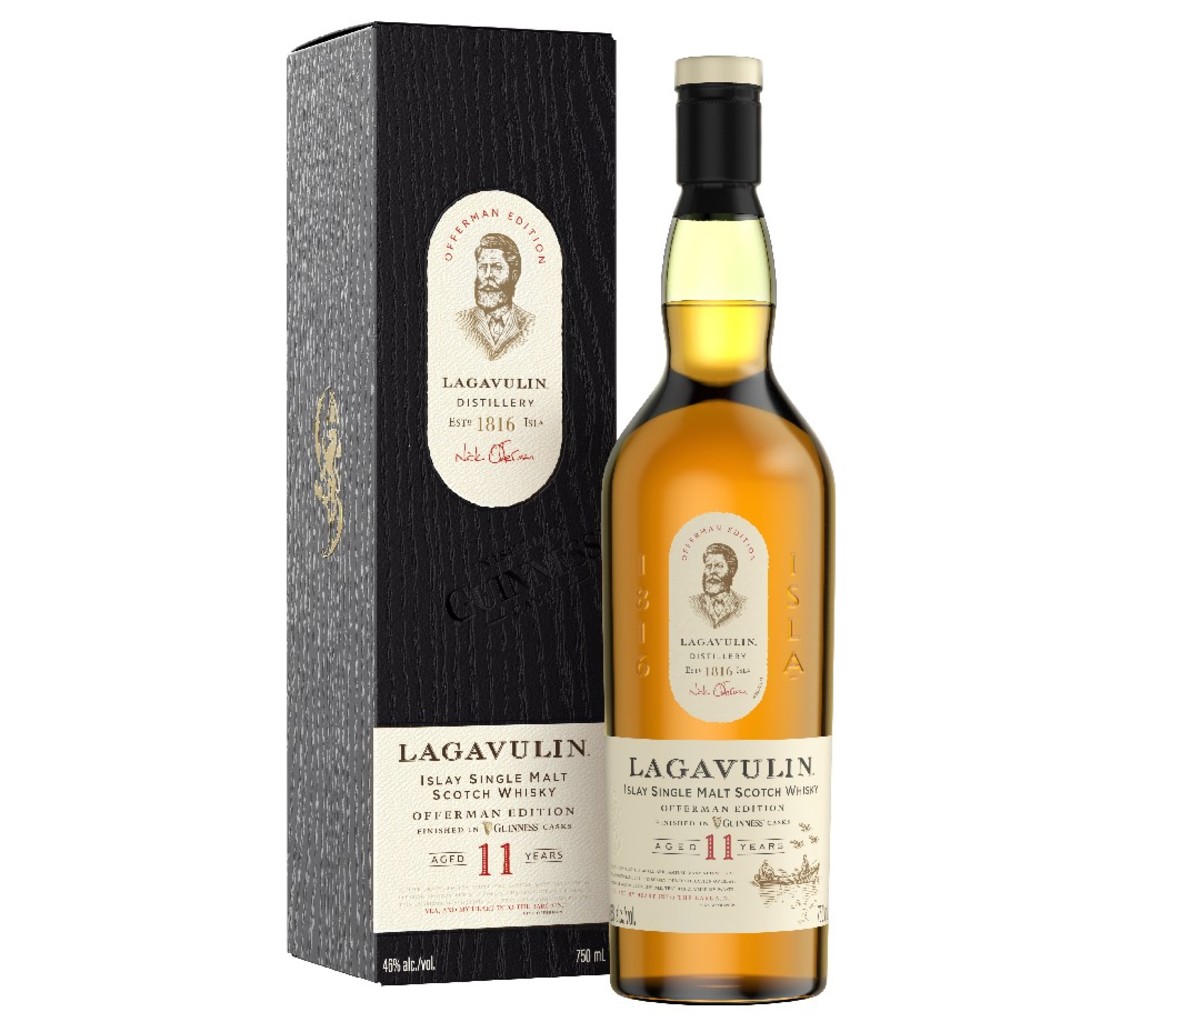 A box alongside bottle of Lagavulin Offerman Edition: Guinness Cask Finish